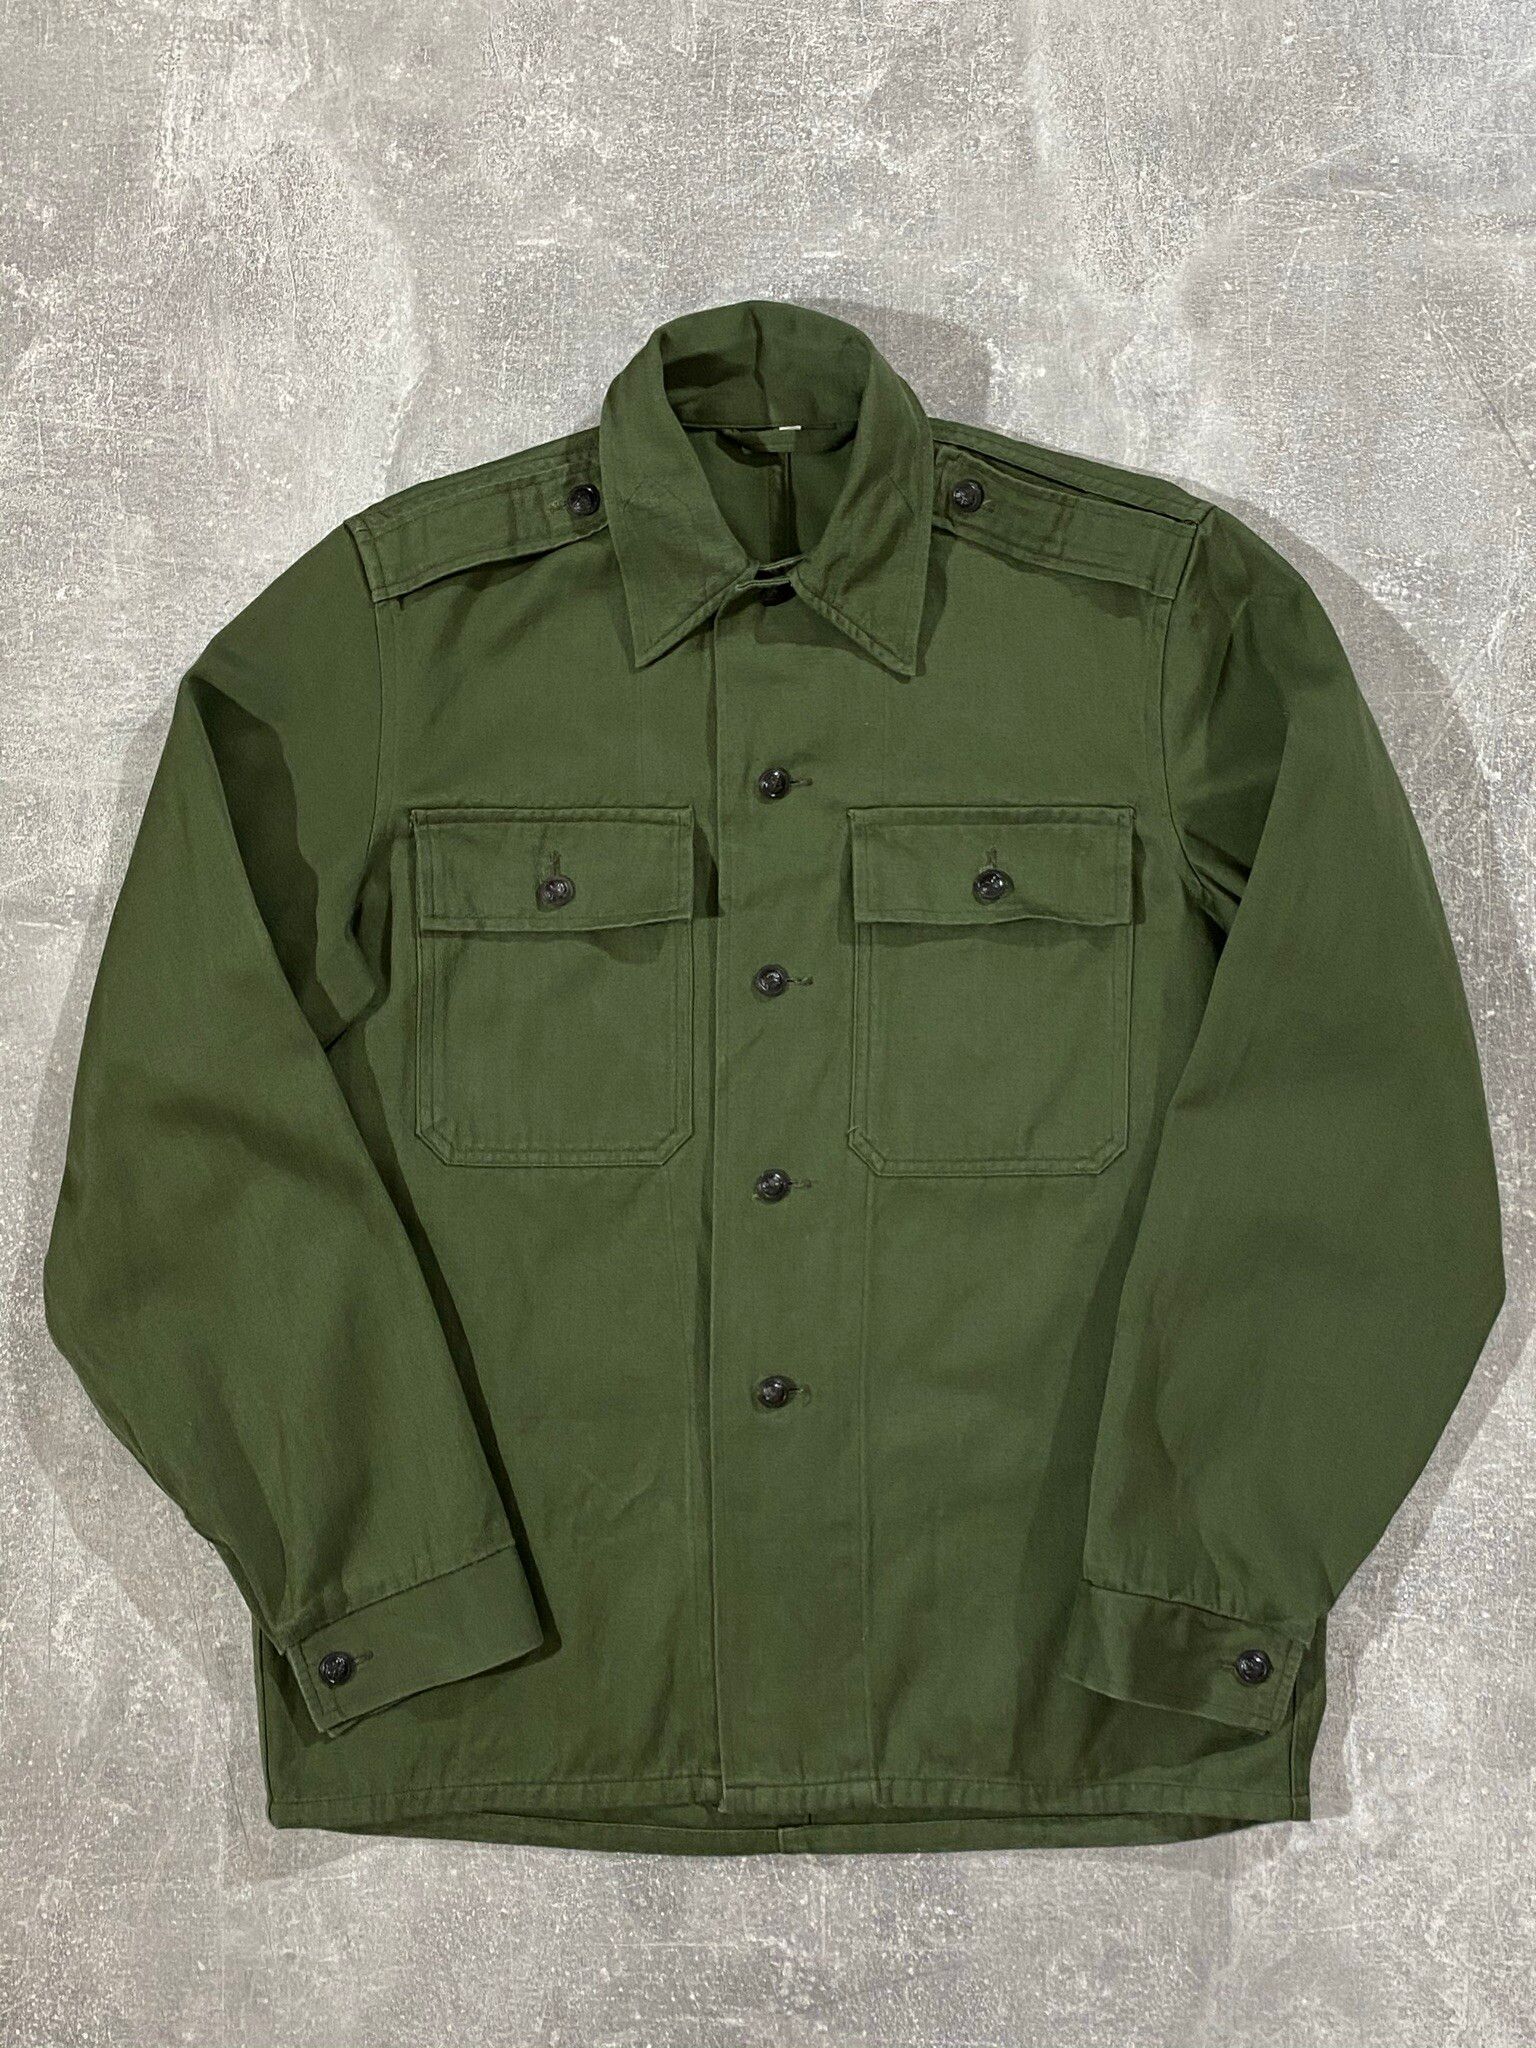 Vintage Vintage 1980 Army Military Cotton Jacket Kapital Style | Grailed